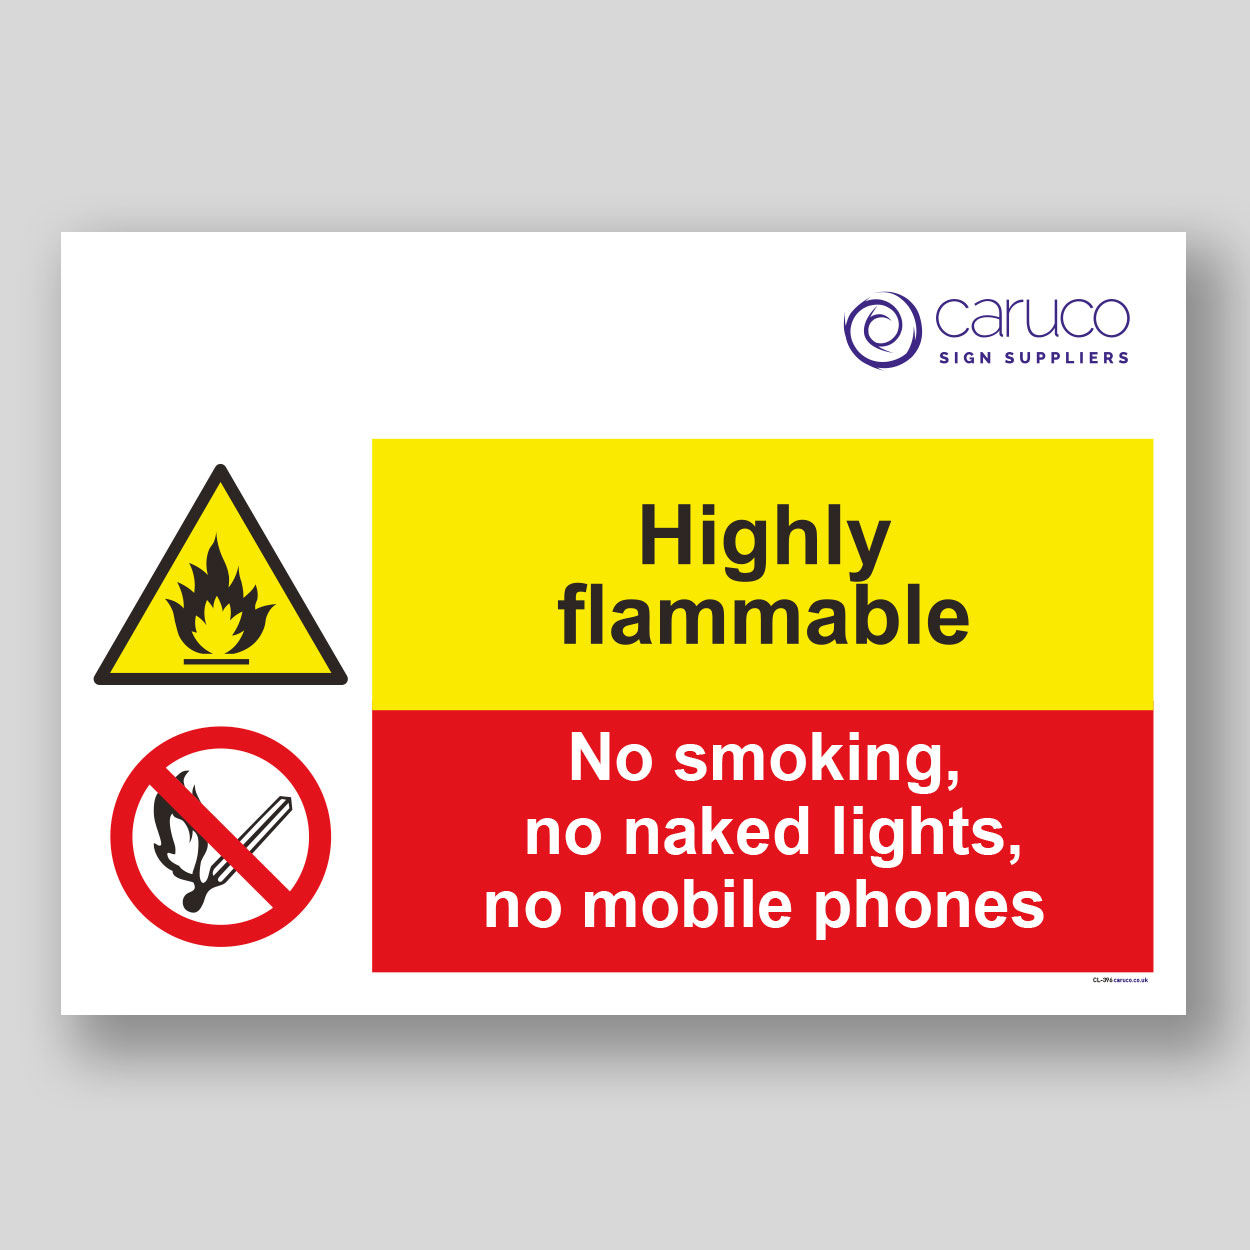 CL-396 Highly flammable - no smoking, no light, no mobile phones